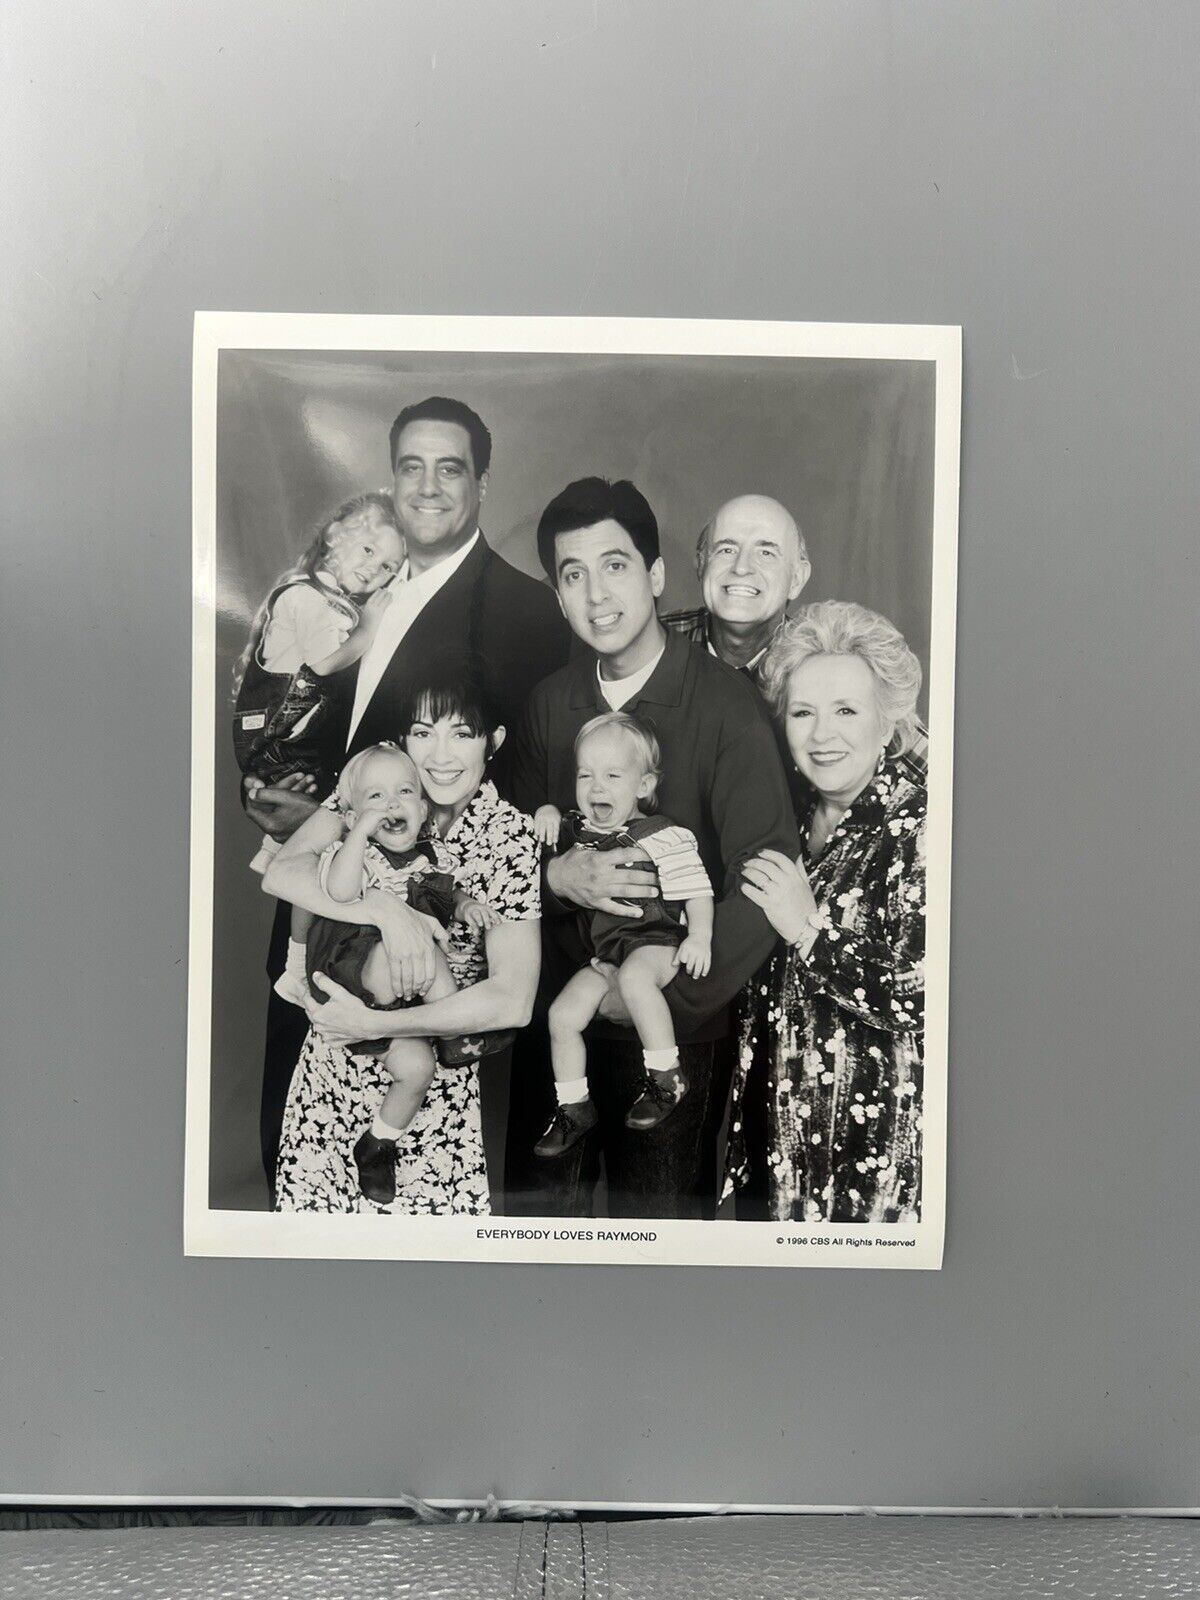 Everybody Loves Raymond casts CBS press released 8x10 photo